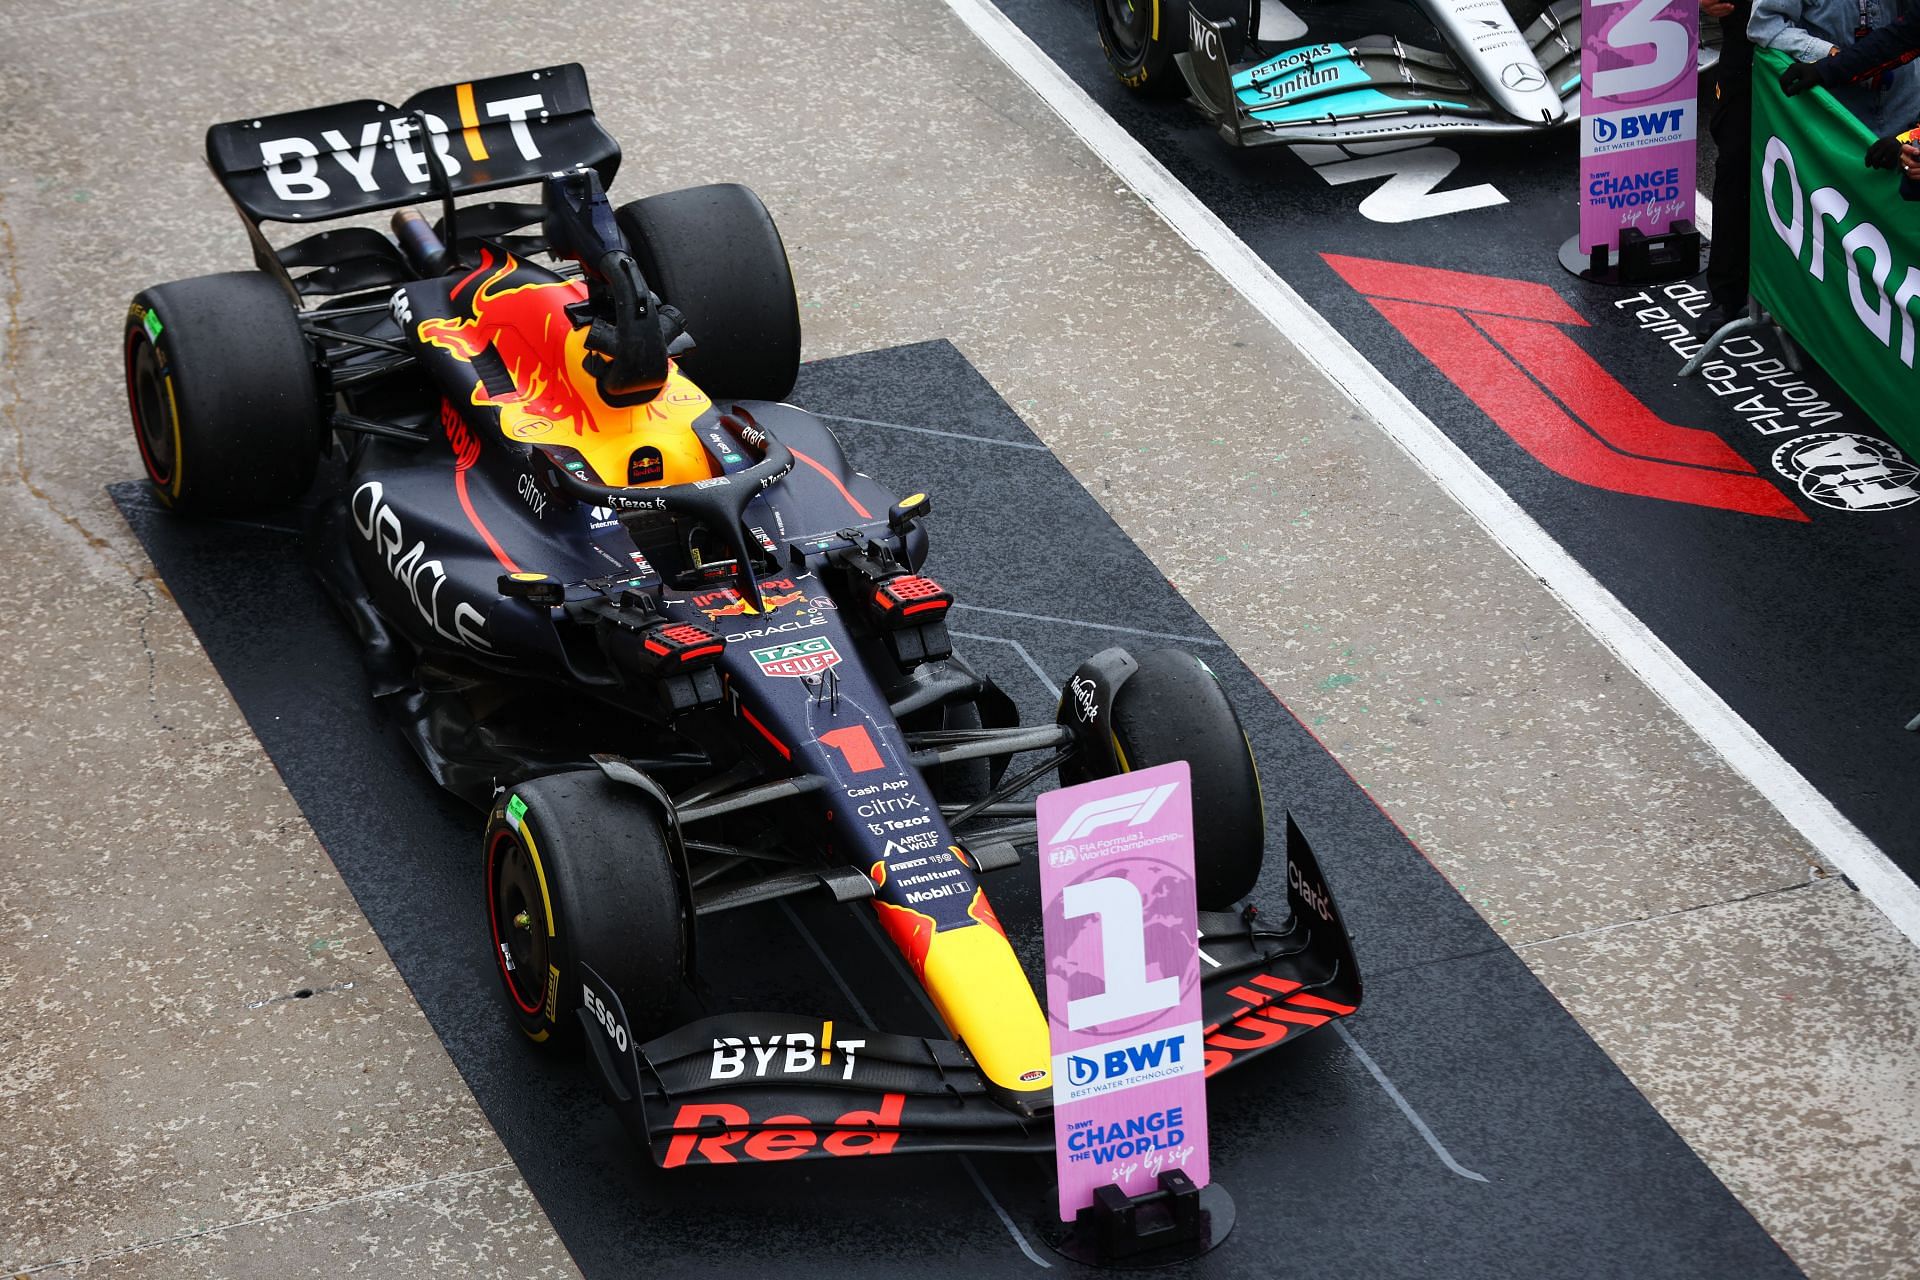 F1 Grand Prix of Hungary - Max Verstappen wins in Hungary.